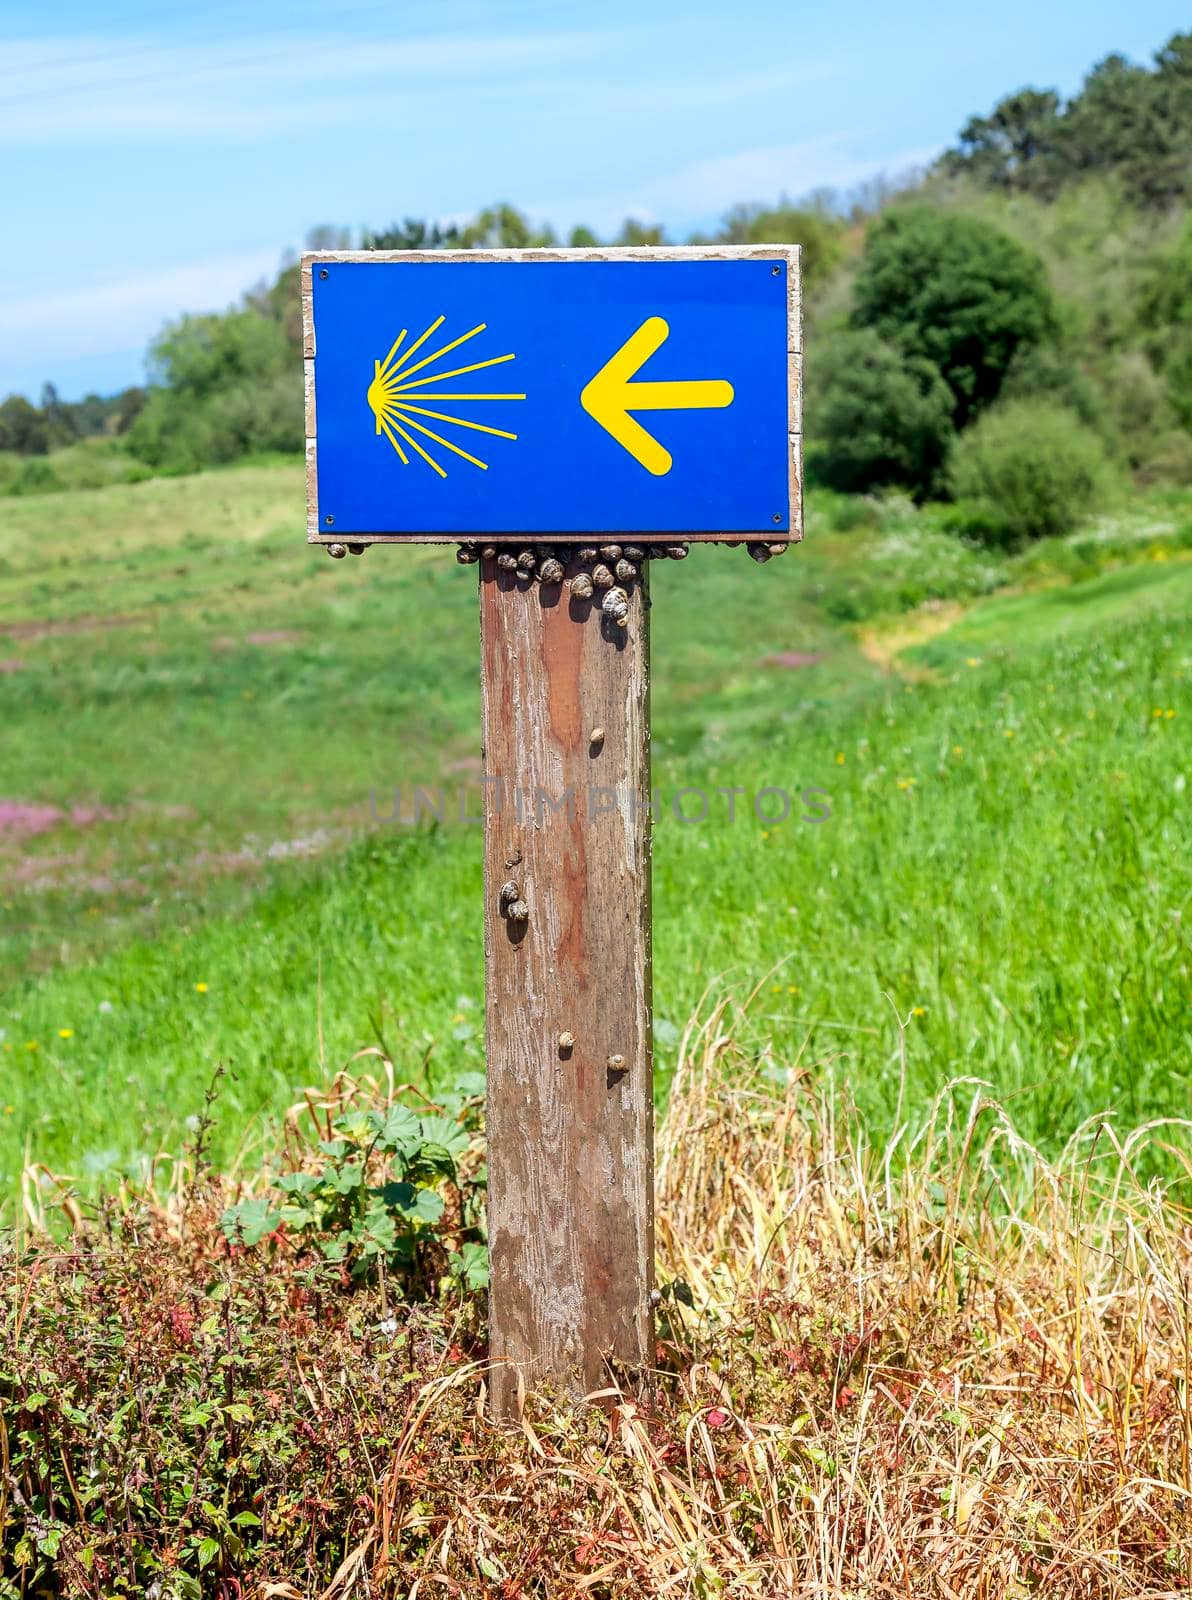 Road sign of Camino de Santiago, pilgrimage route to the Cathedral of Santiago de Compostela